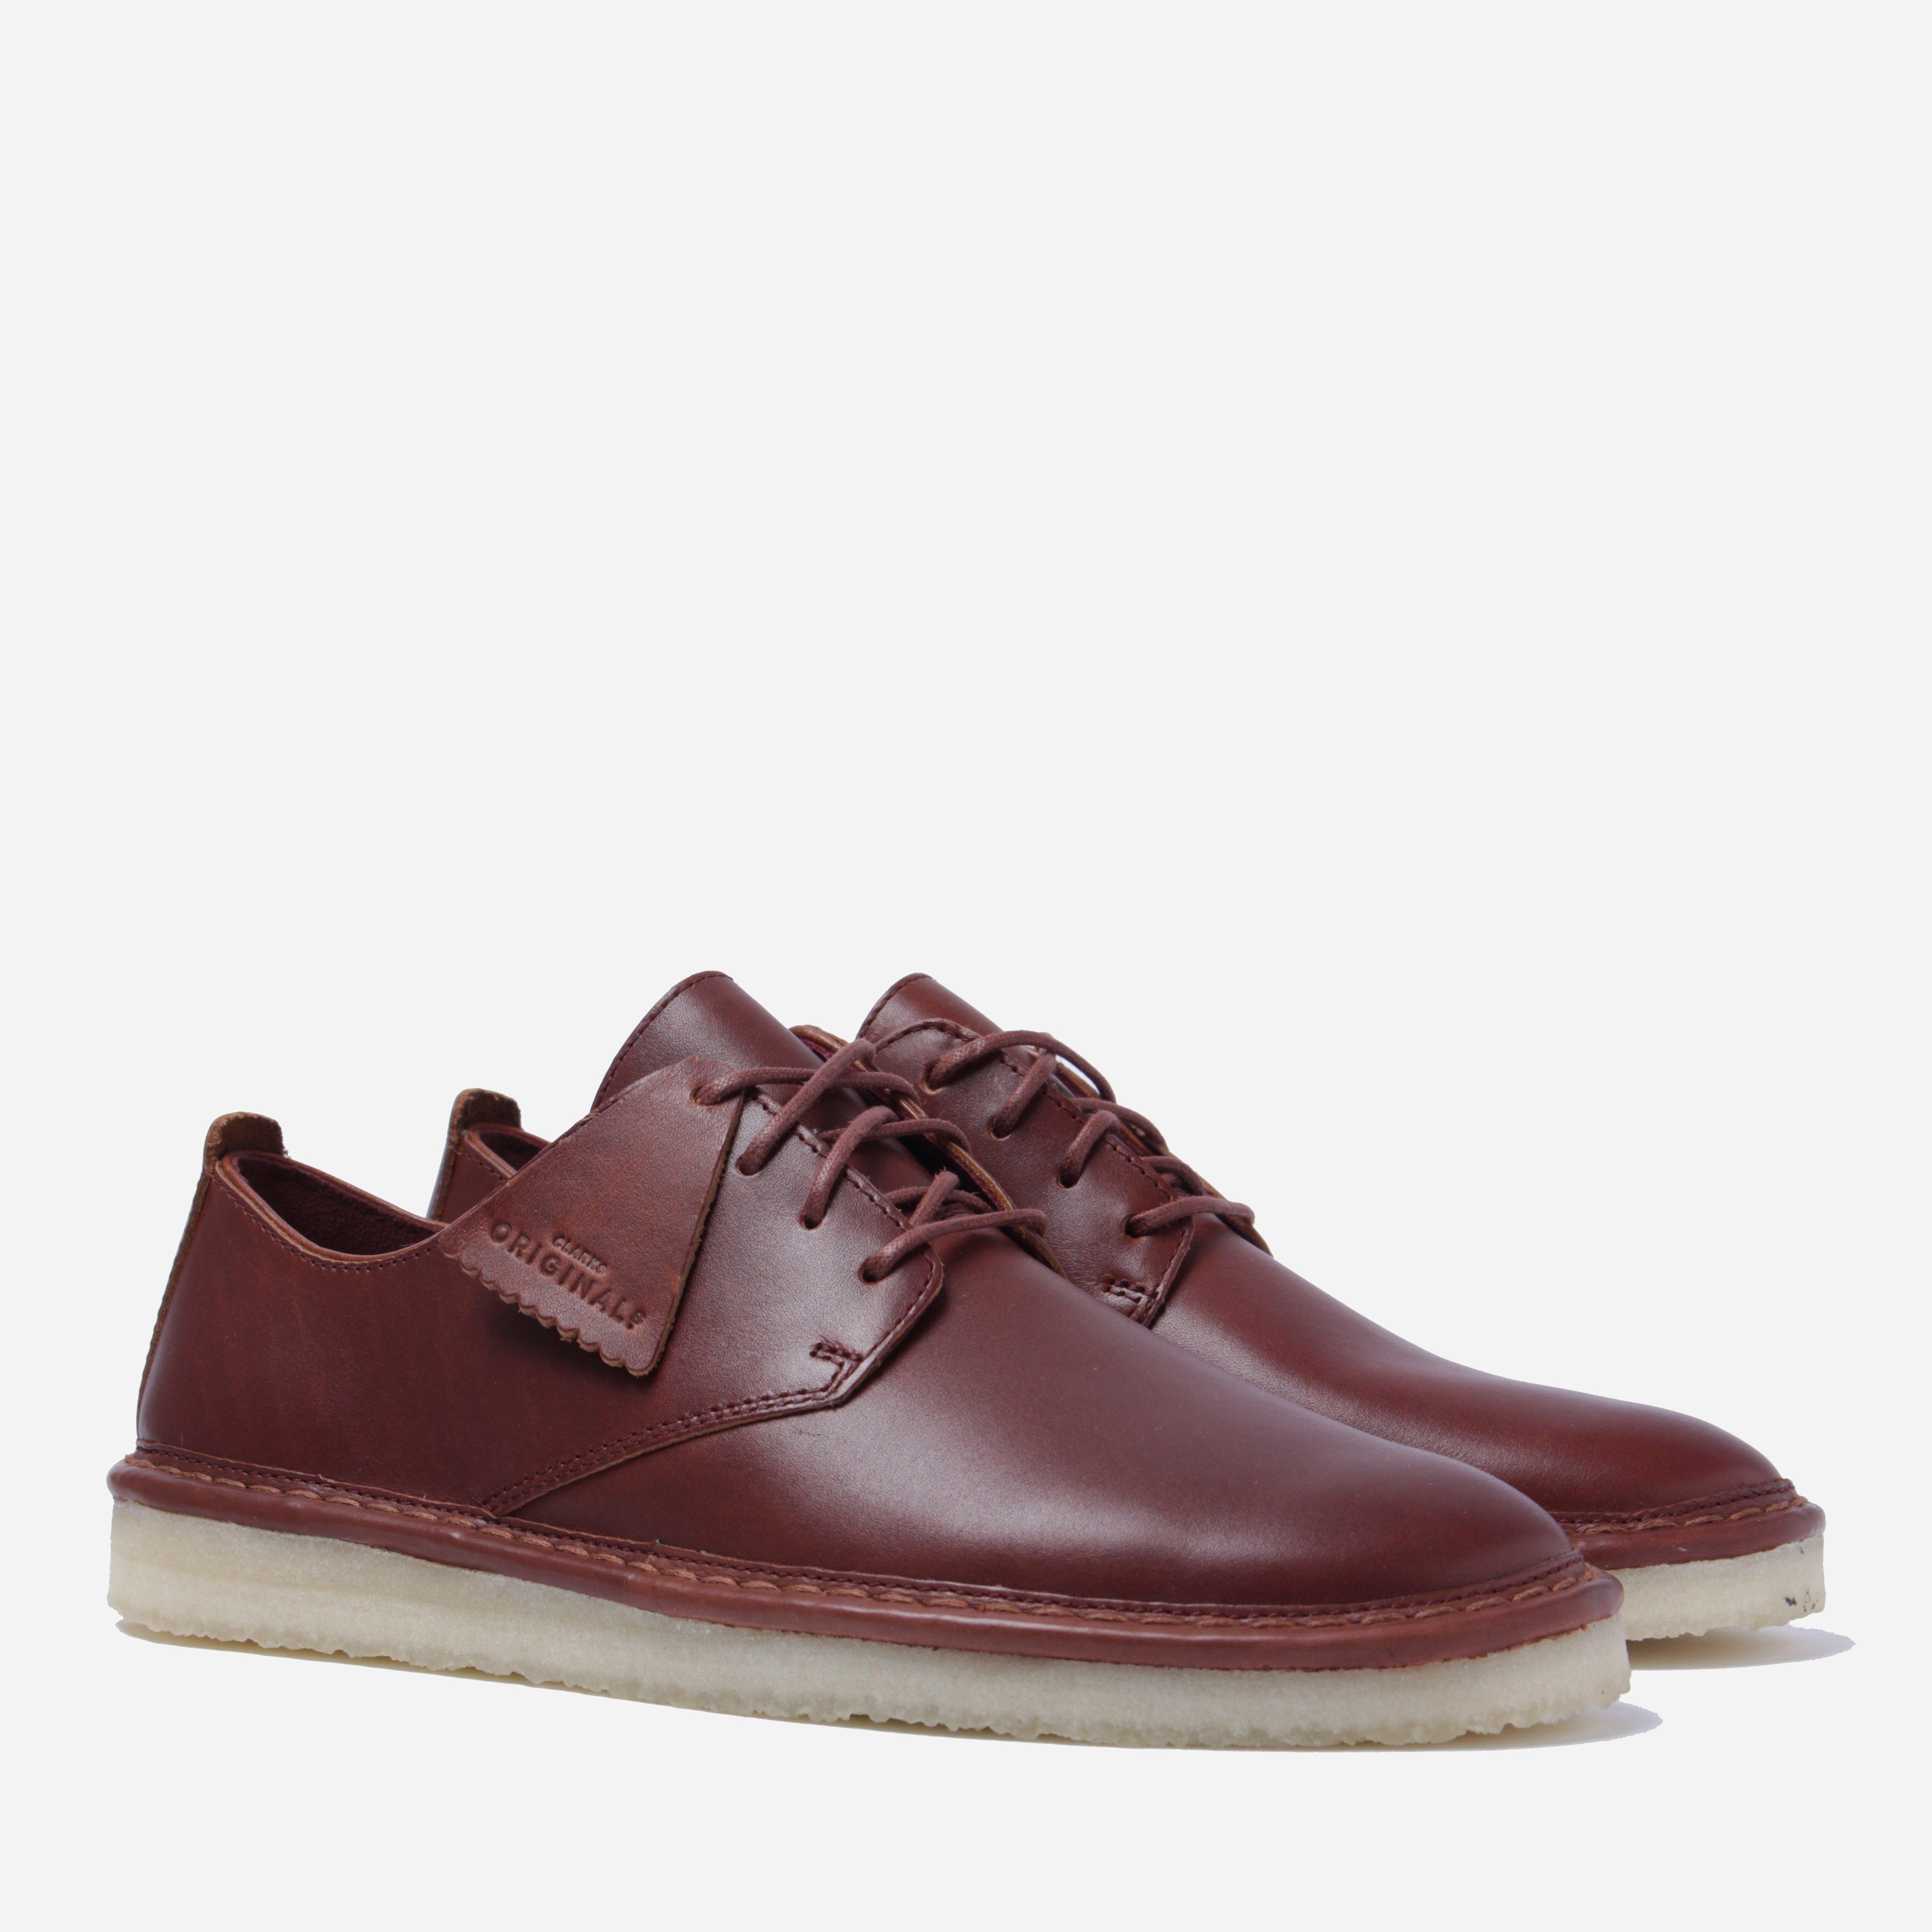 Clarks Walbridge Shoes in Brown for Men - Lyst